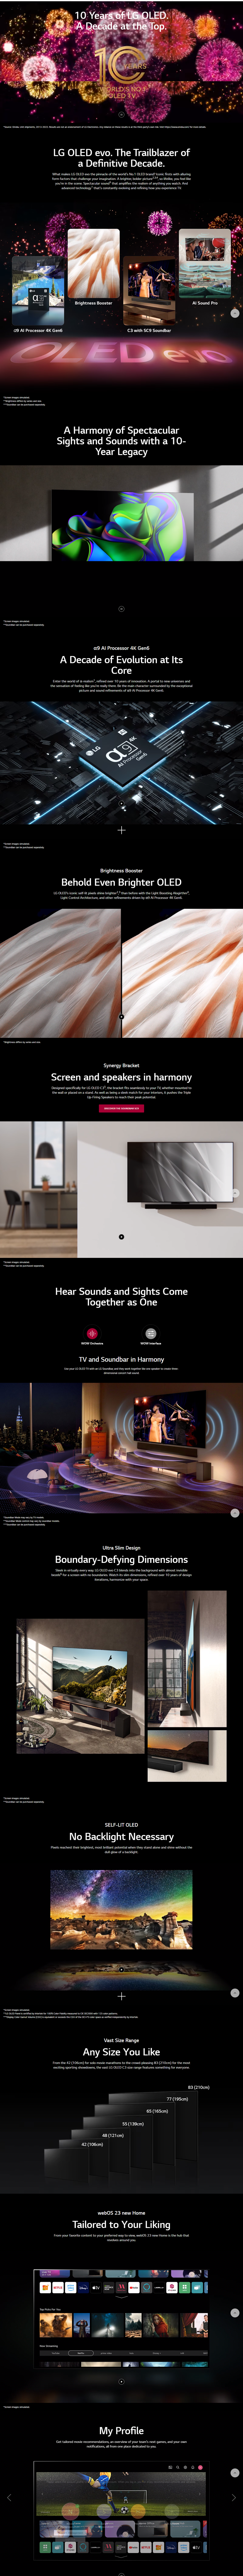 LG OLED evo C3 48 (121cm) 4K Smart TV (TV Wall Design, WebOS, Gaming TV, OLED48C3)